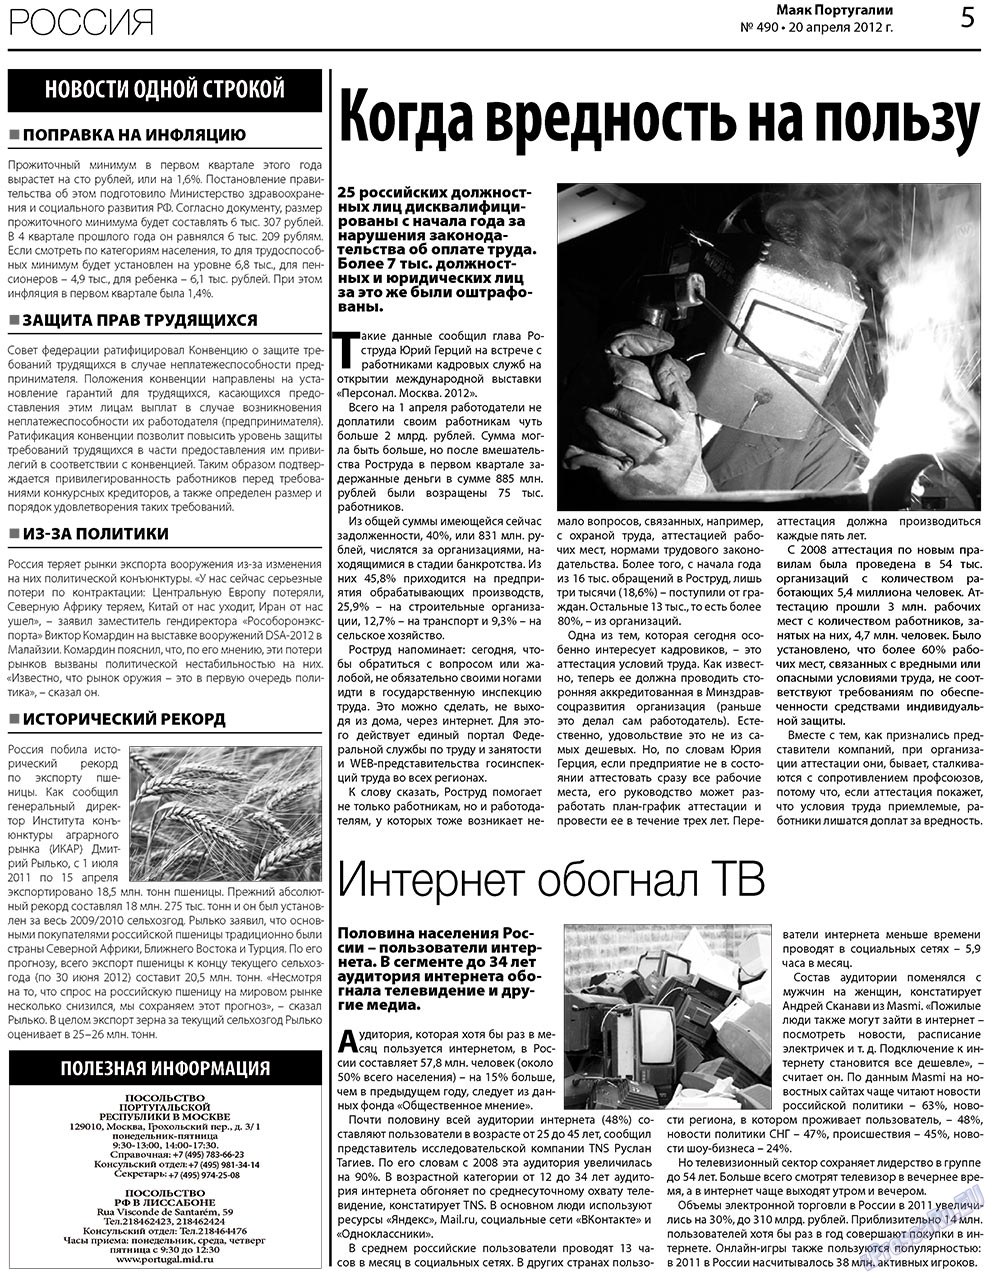 Маяк Португалии, газета. 2012 №490 стр.5